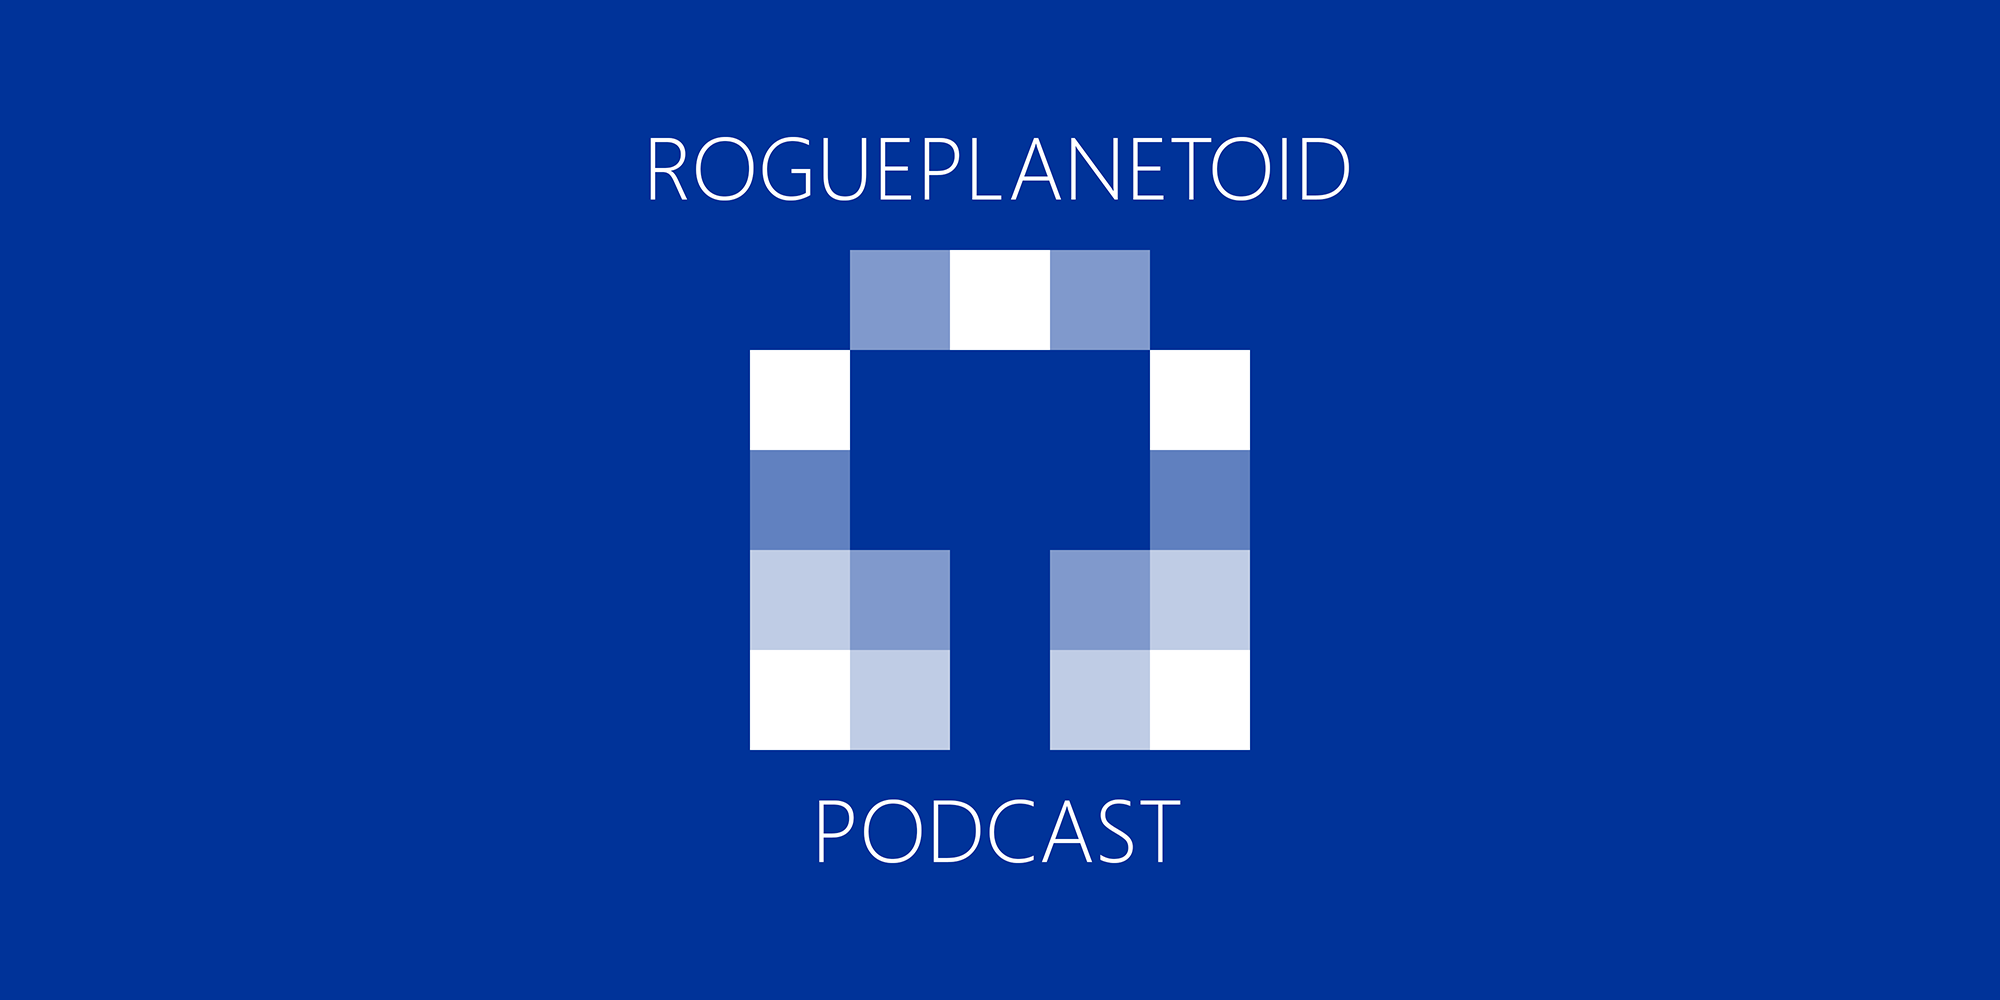 RoguePlanetoid Podcast - Episode Three - Microsoft & AI